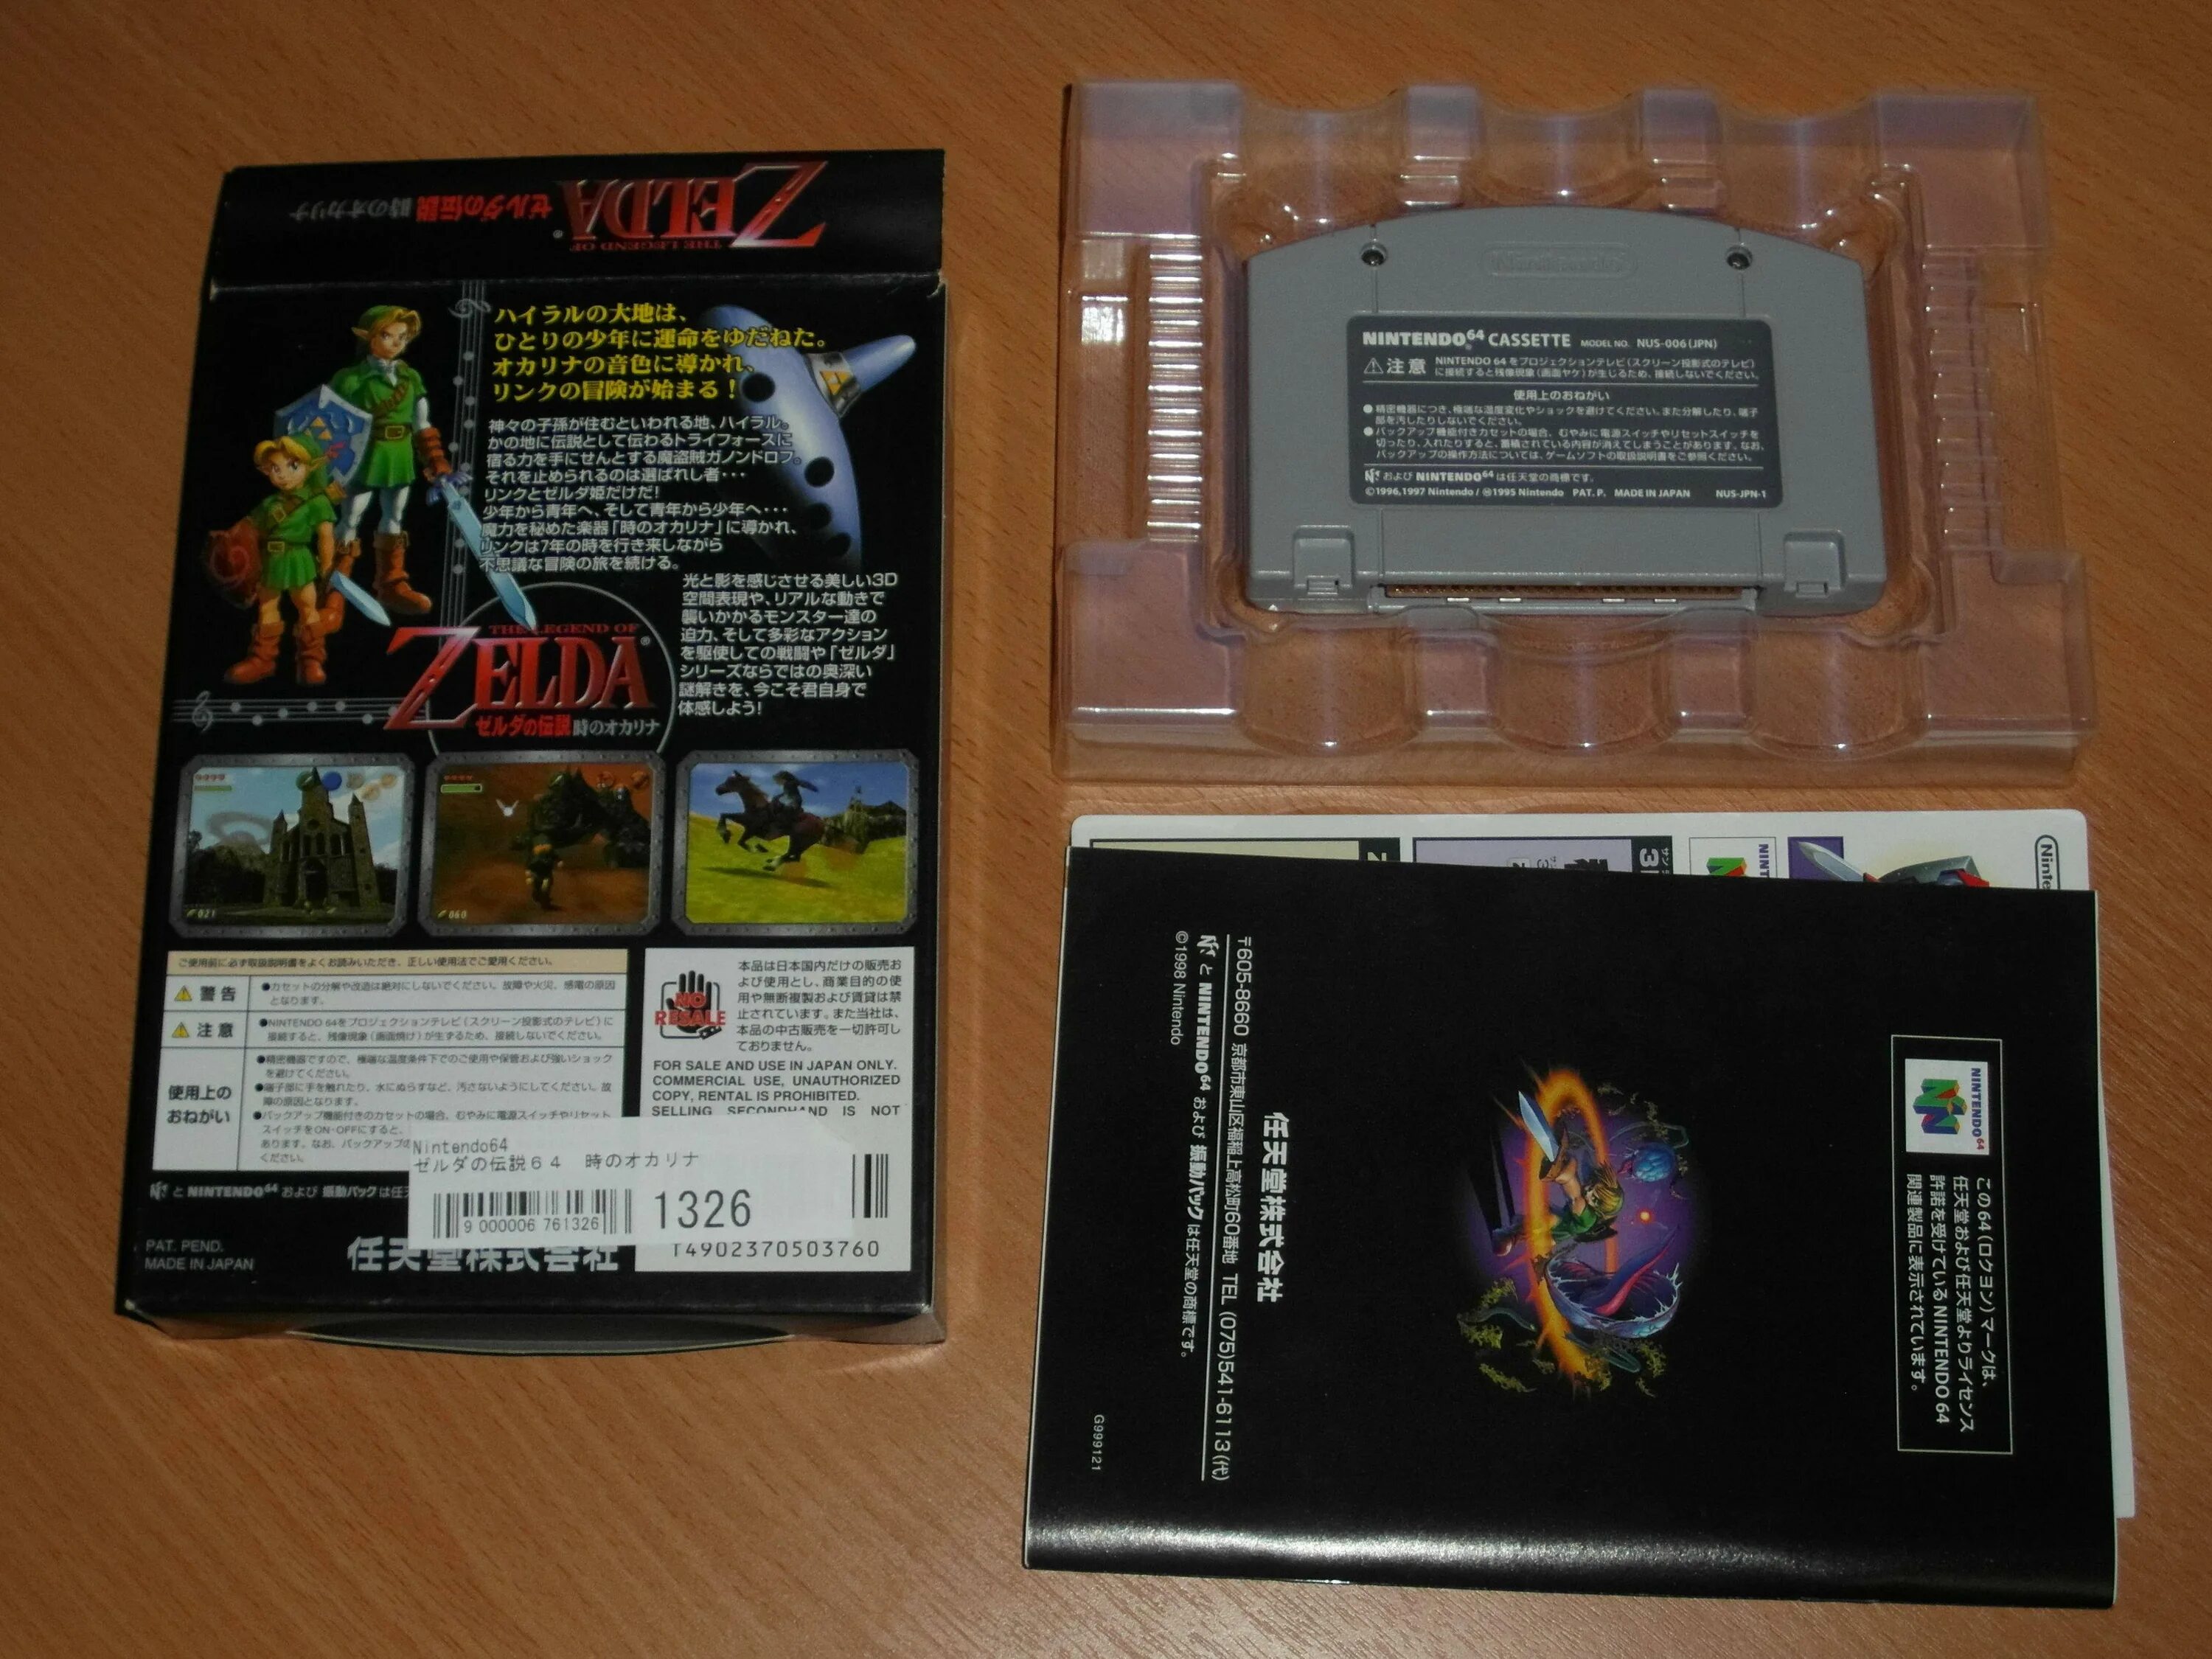 Metroid Famicom Mini GBA. Metroid Famicom картридж. Snes ps2. Нинтендо DS издание Metroid.